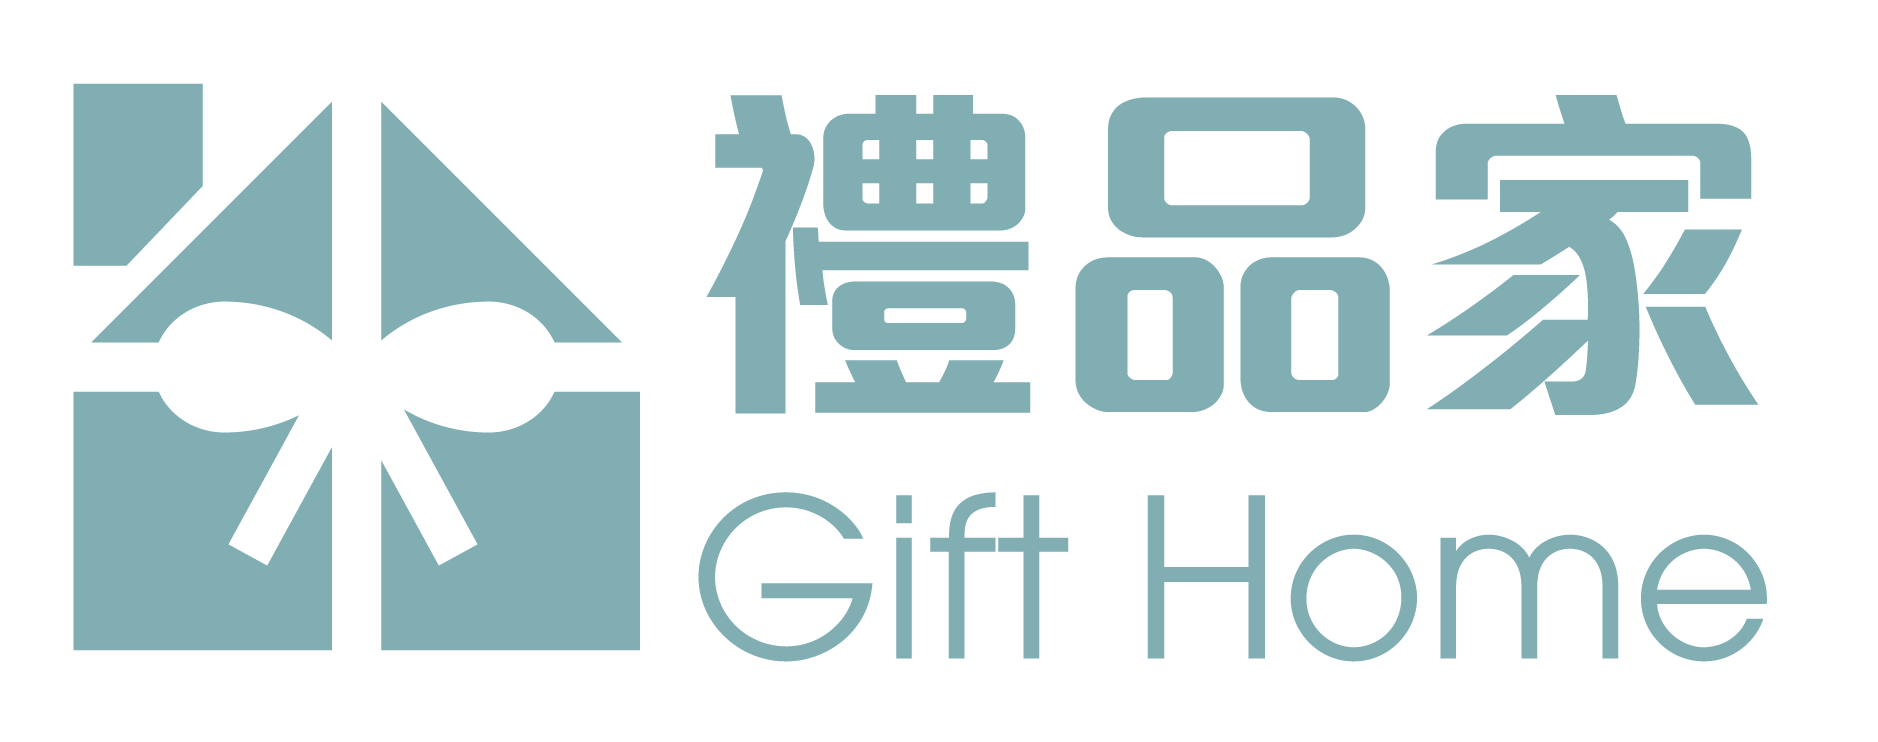 gift-home-logo-23fd826c